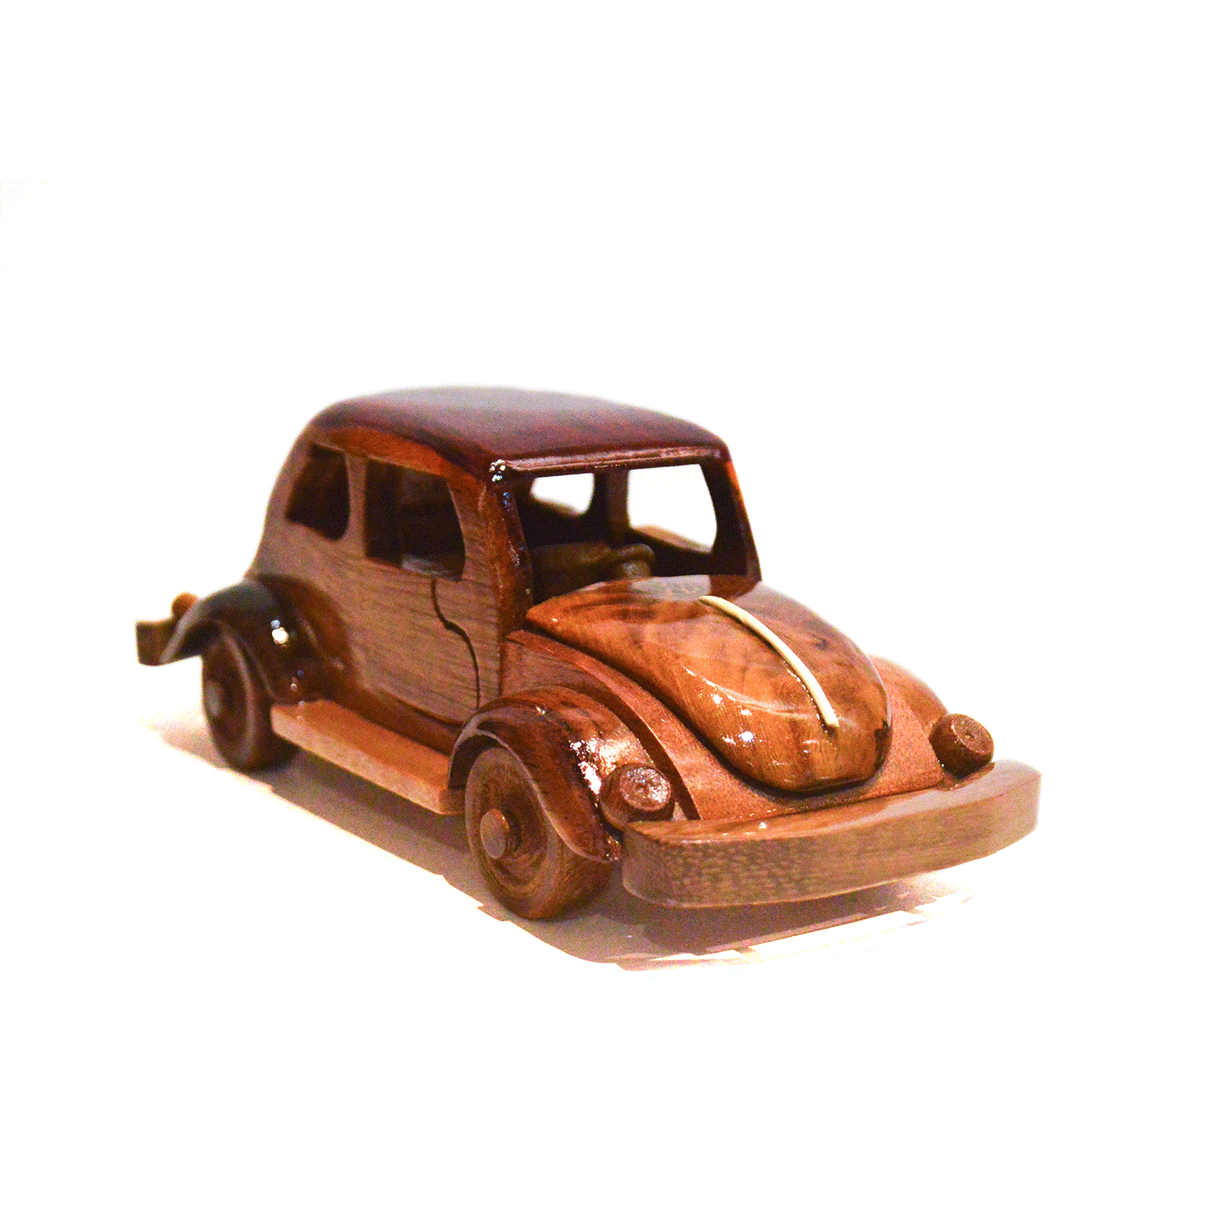 www.costaricacongo.com www.costaricagiftshops.com gift souvenir handmade Wooden collection car / Volkswagen